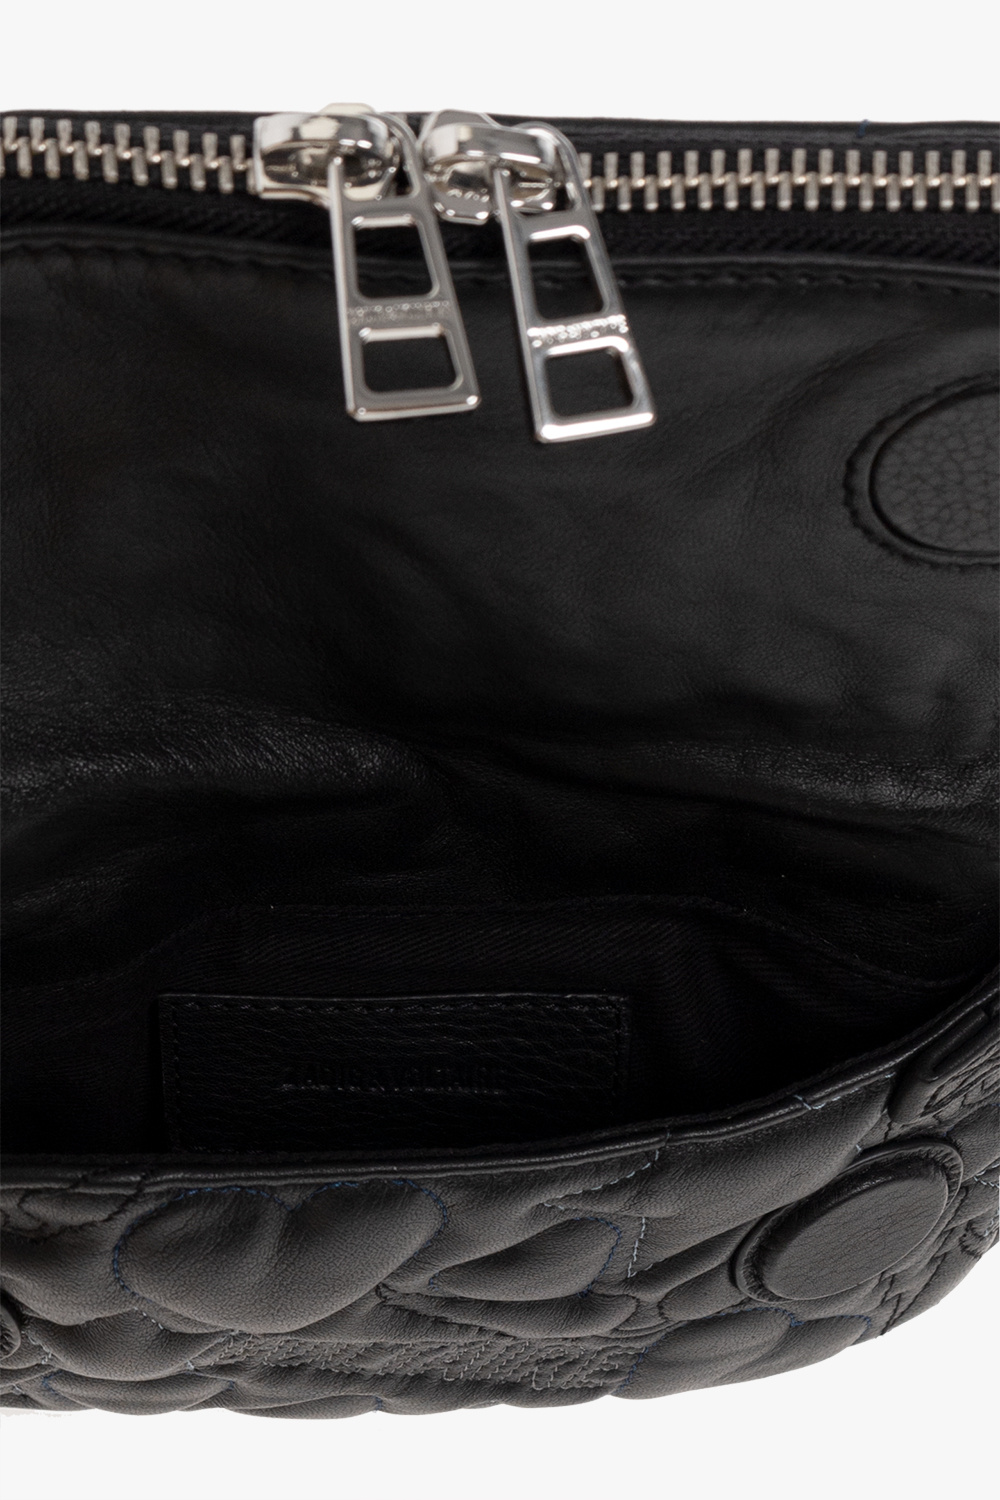 Zadig & Voltaire Black Embossed Leather Crossbody Bag